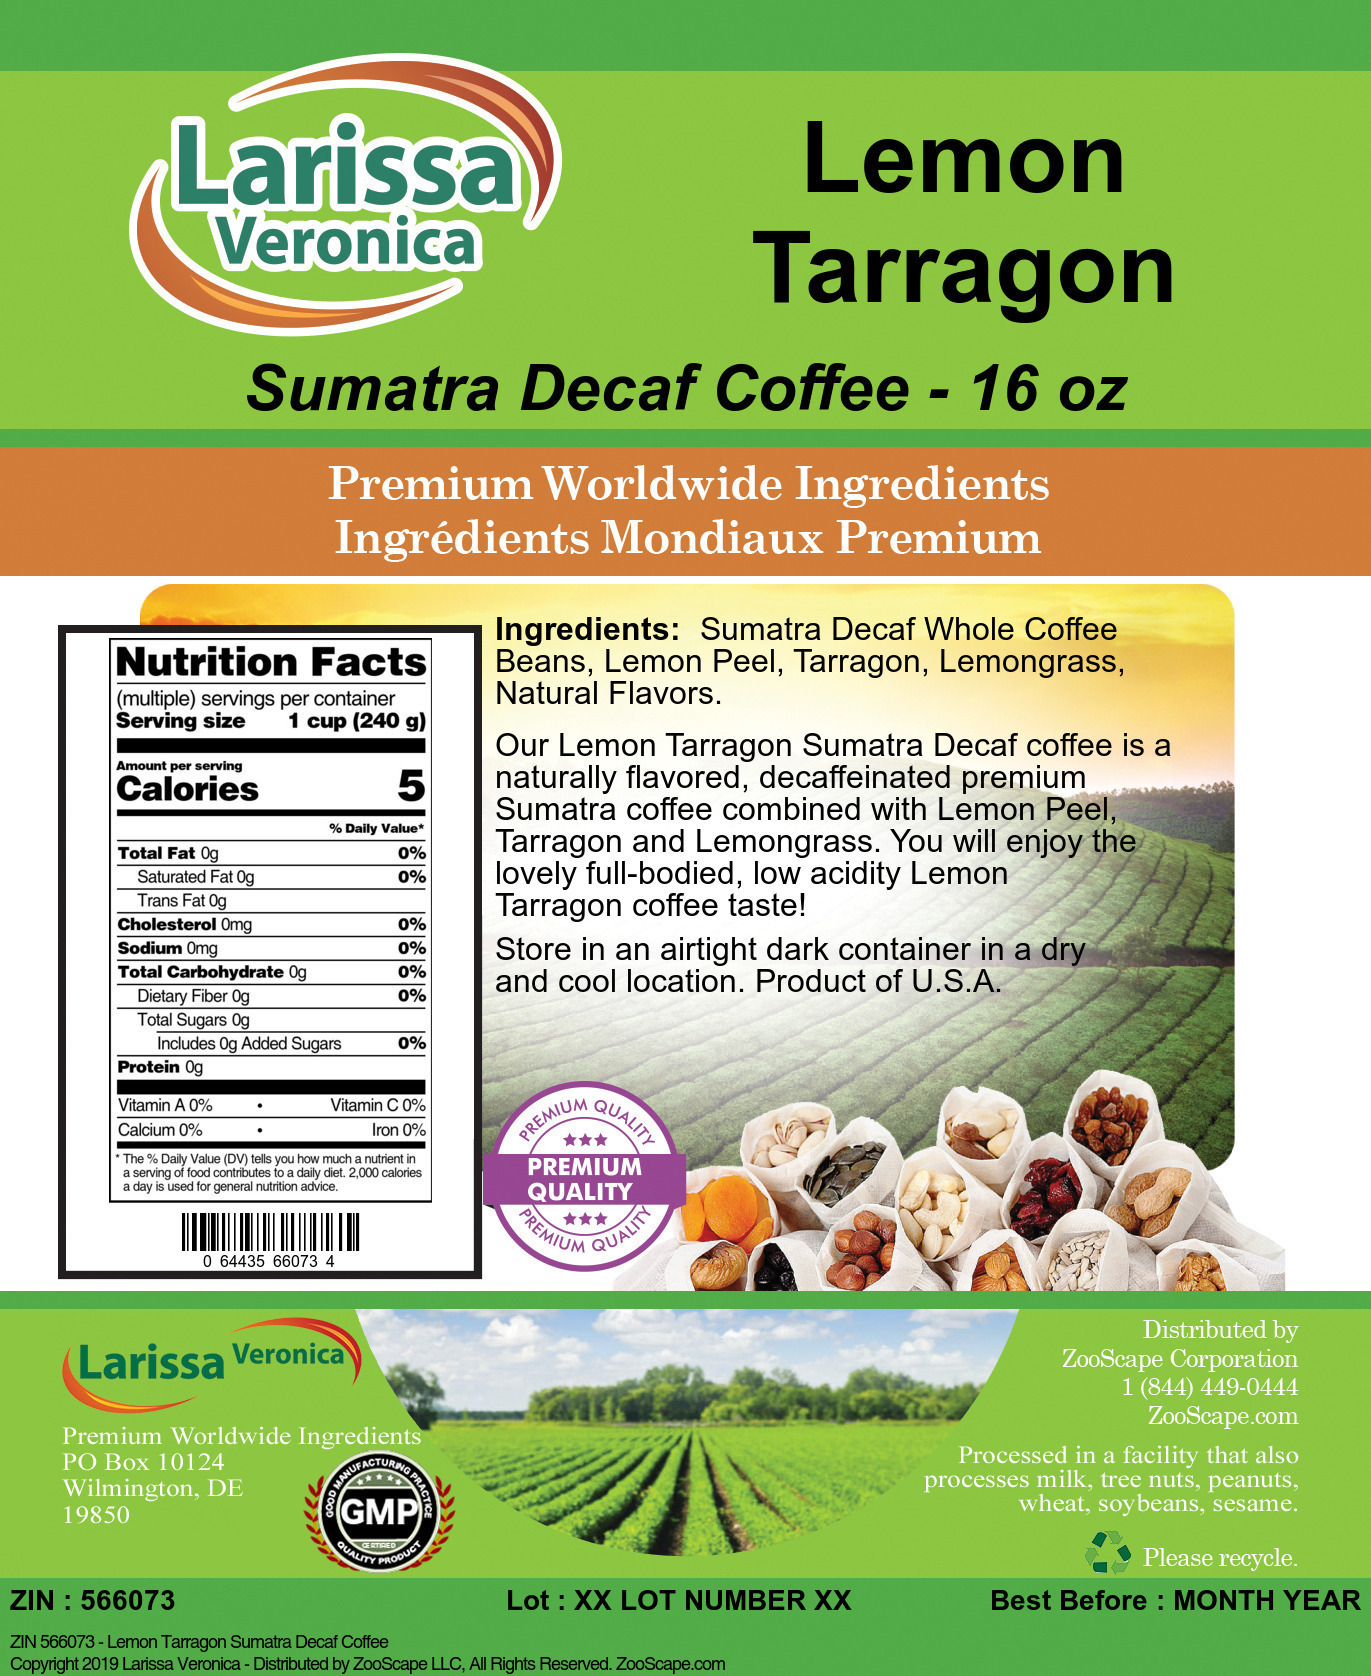 Lemon Tarragon Sumatra Decaf Coffee - Label